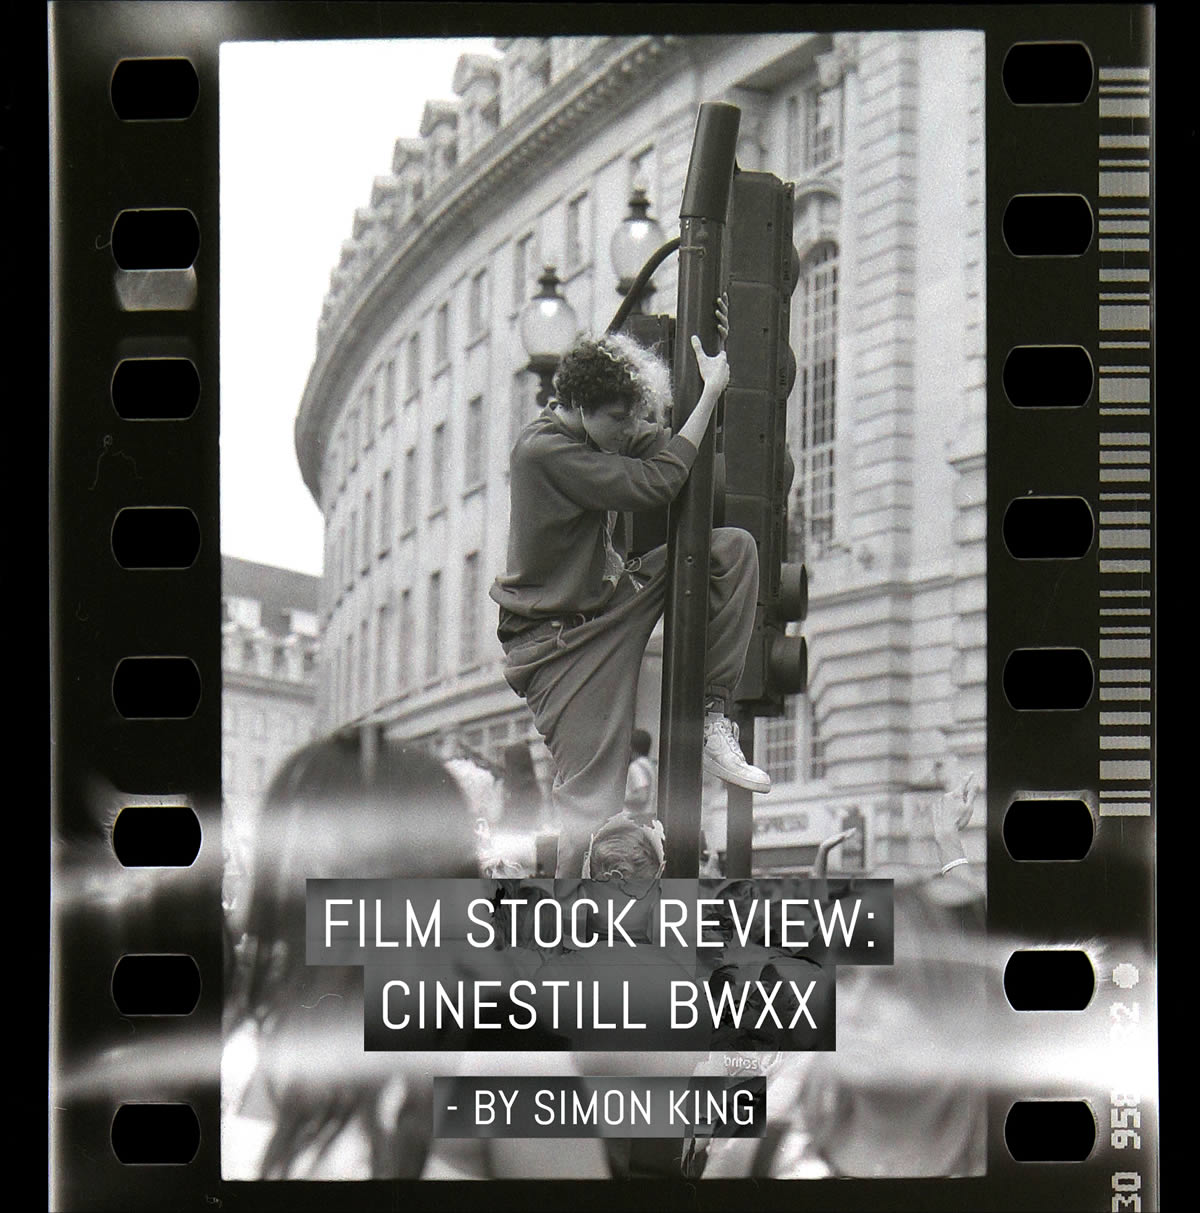 Film stock review: Cinestill BWXX - by Simon King